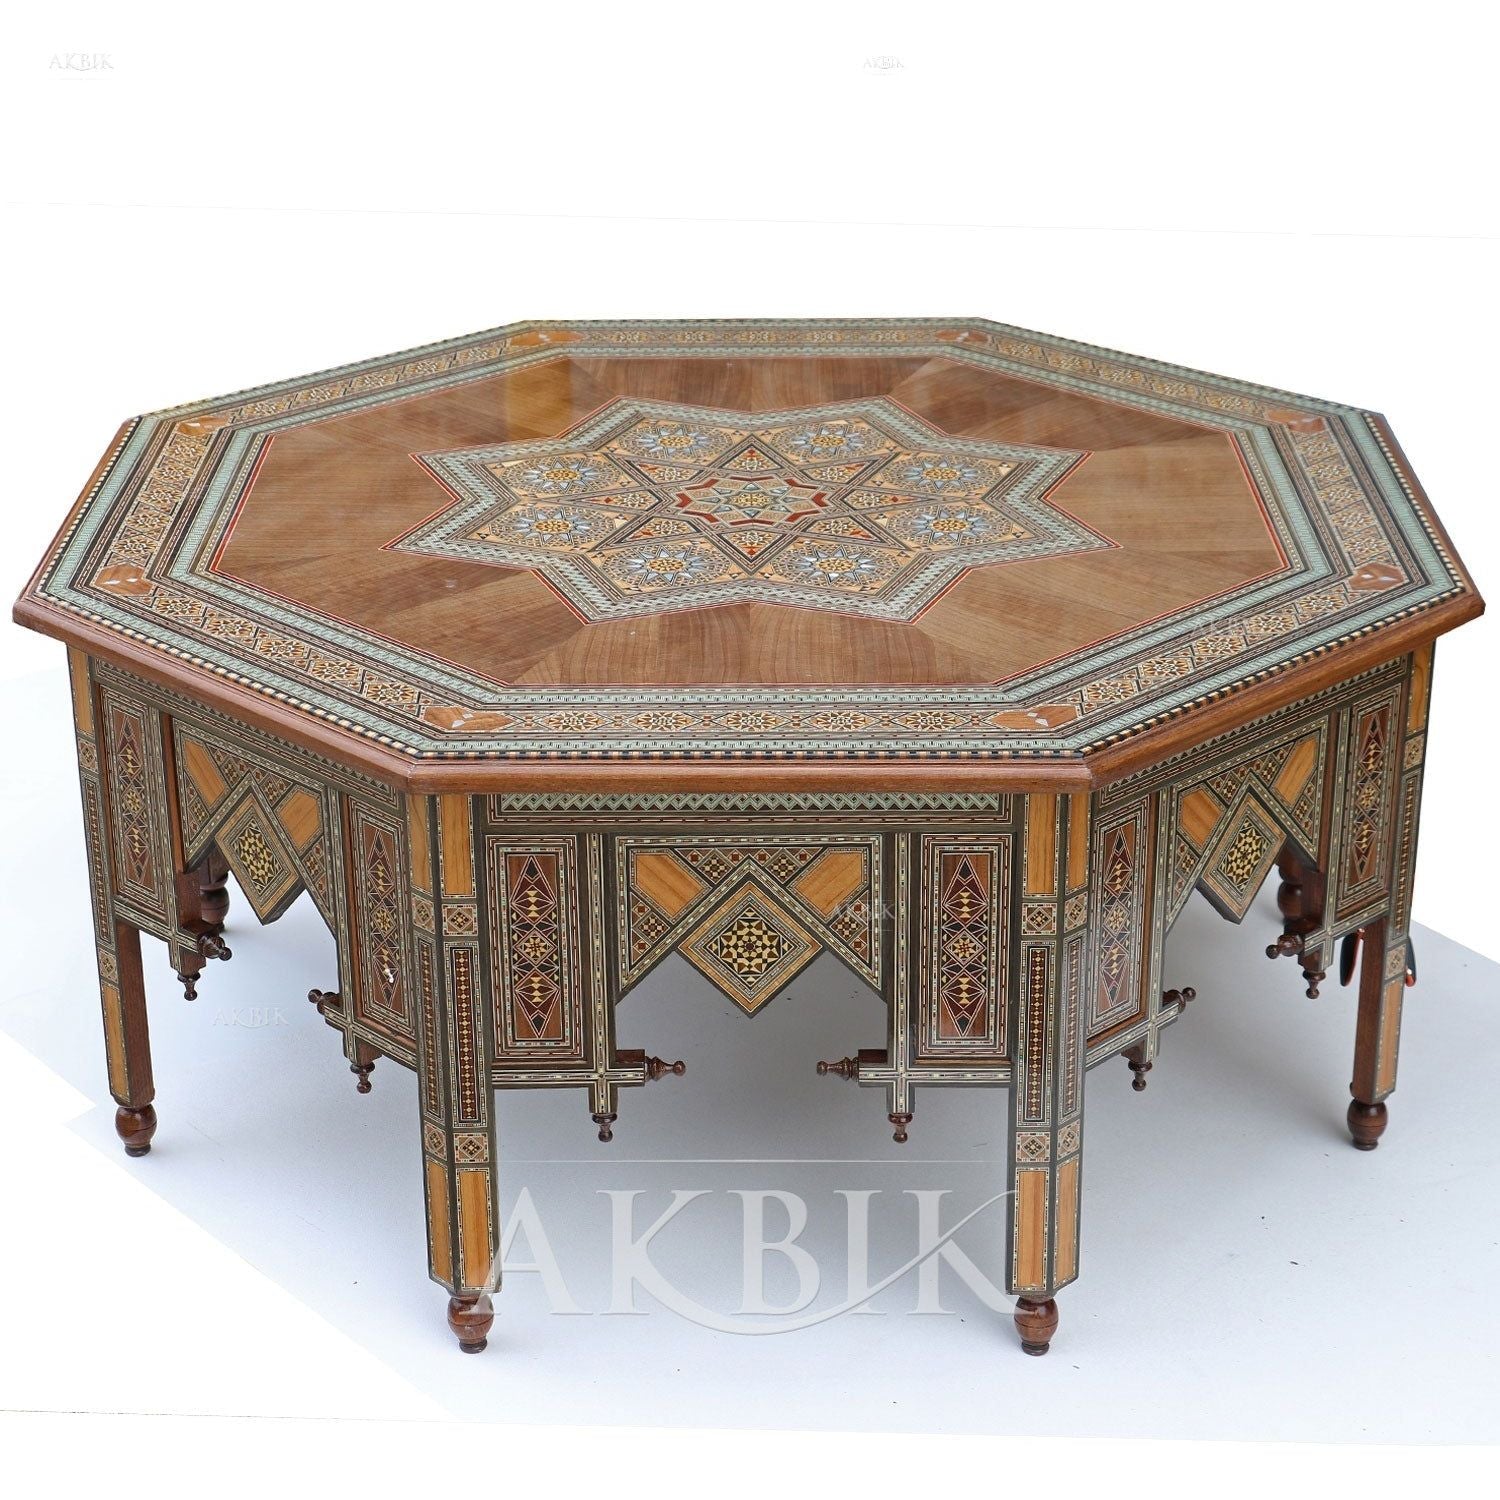 Aurelia Coffee Table - AKBIK Furniture & Design